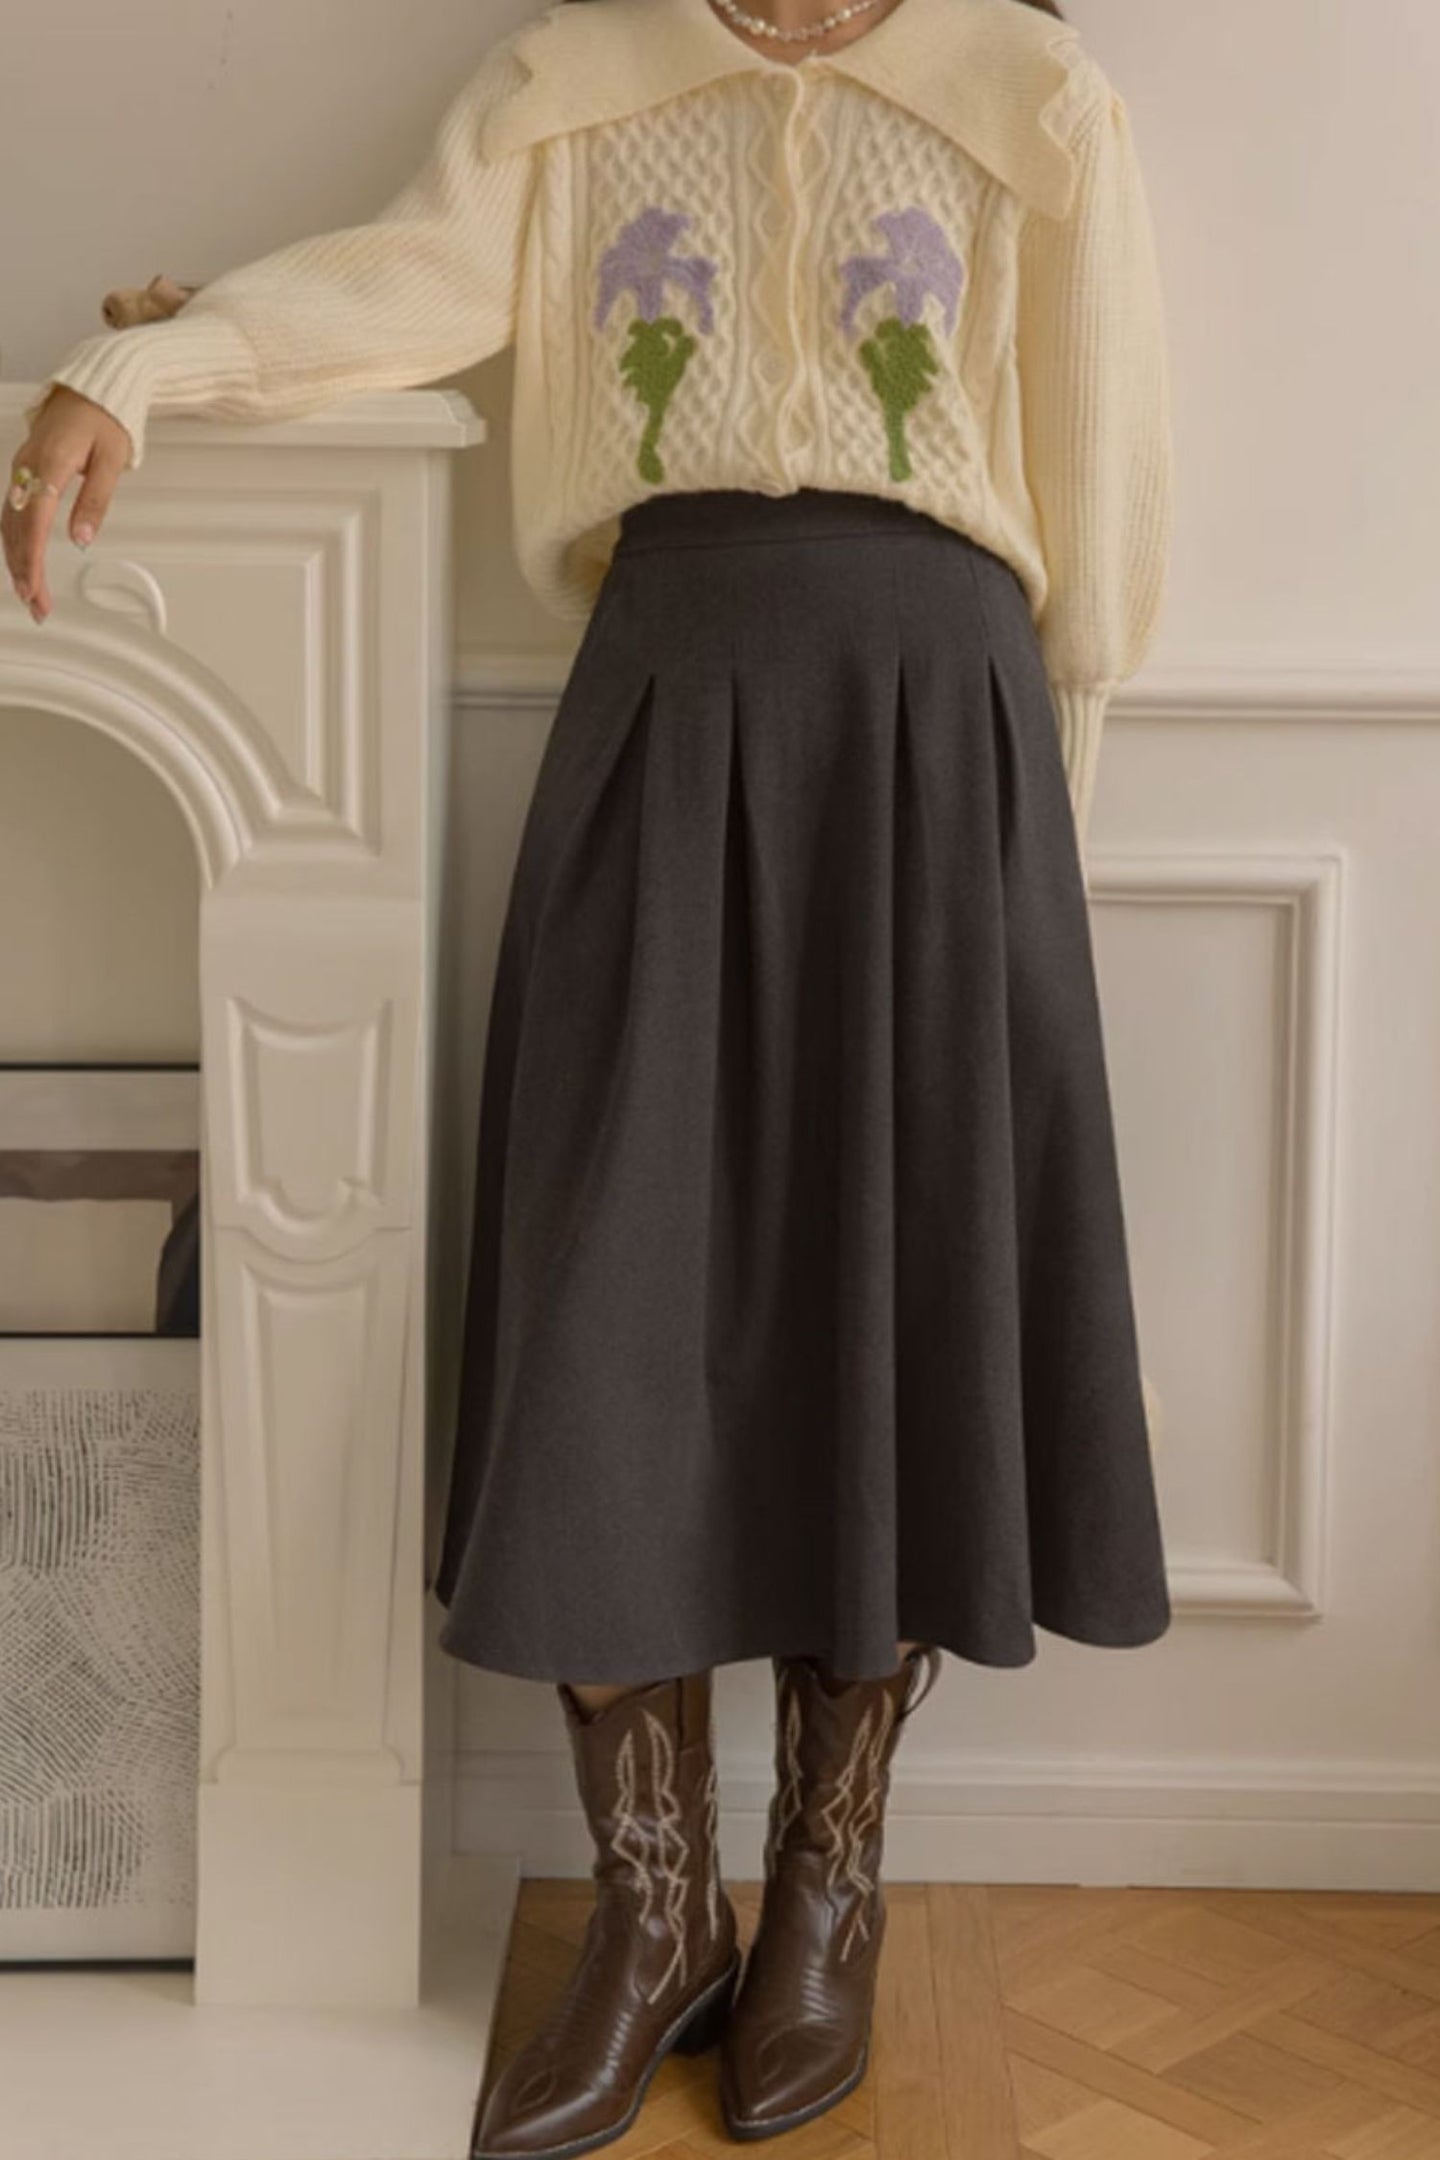 Pleated gray midi wool winter skirt C3525